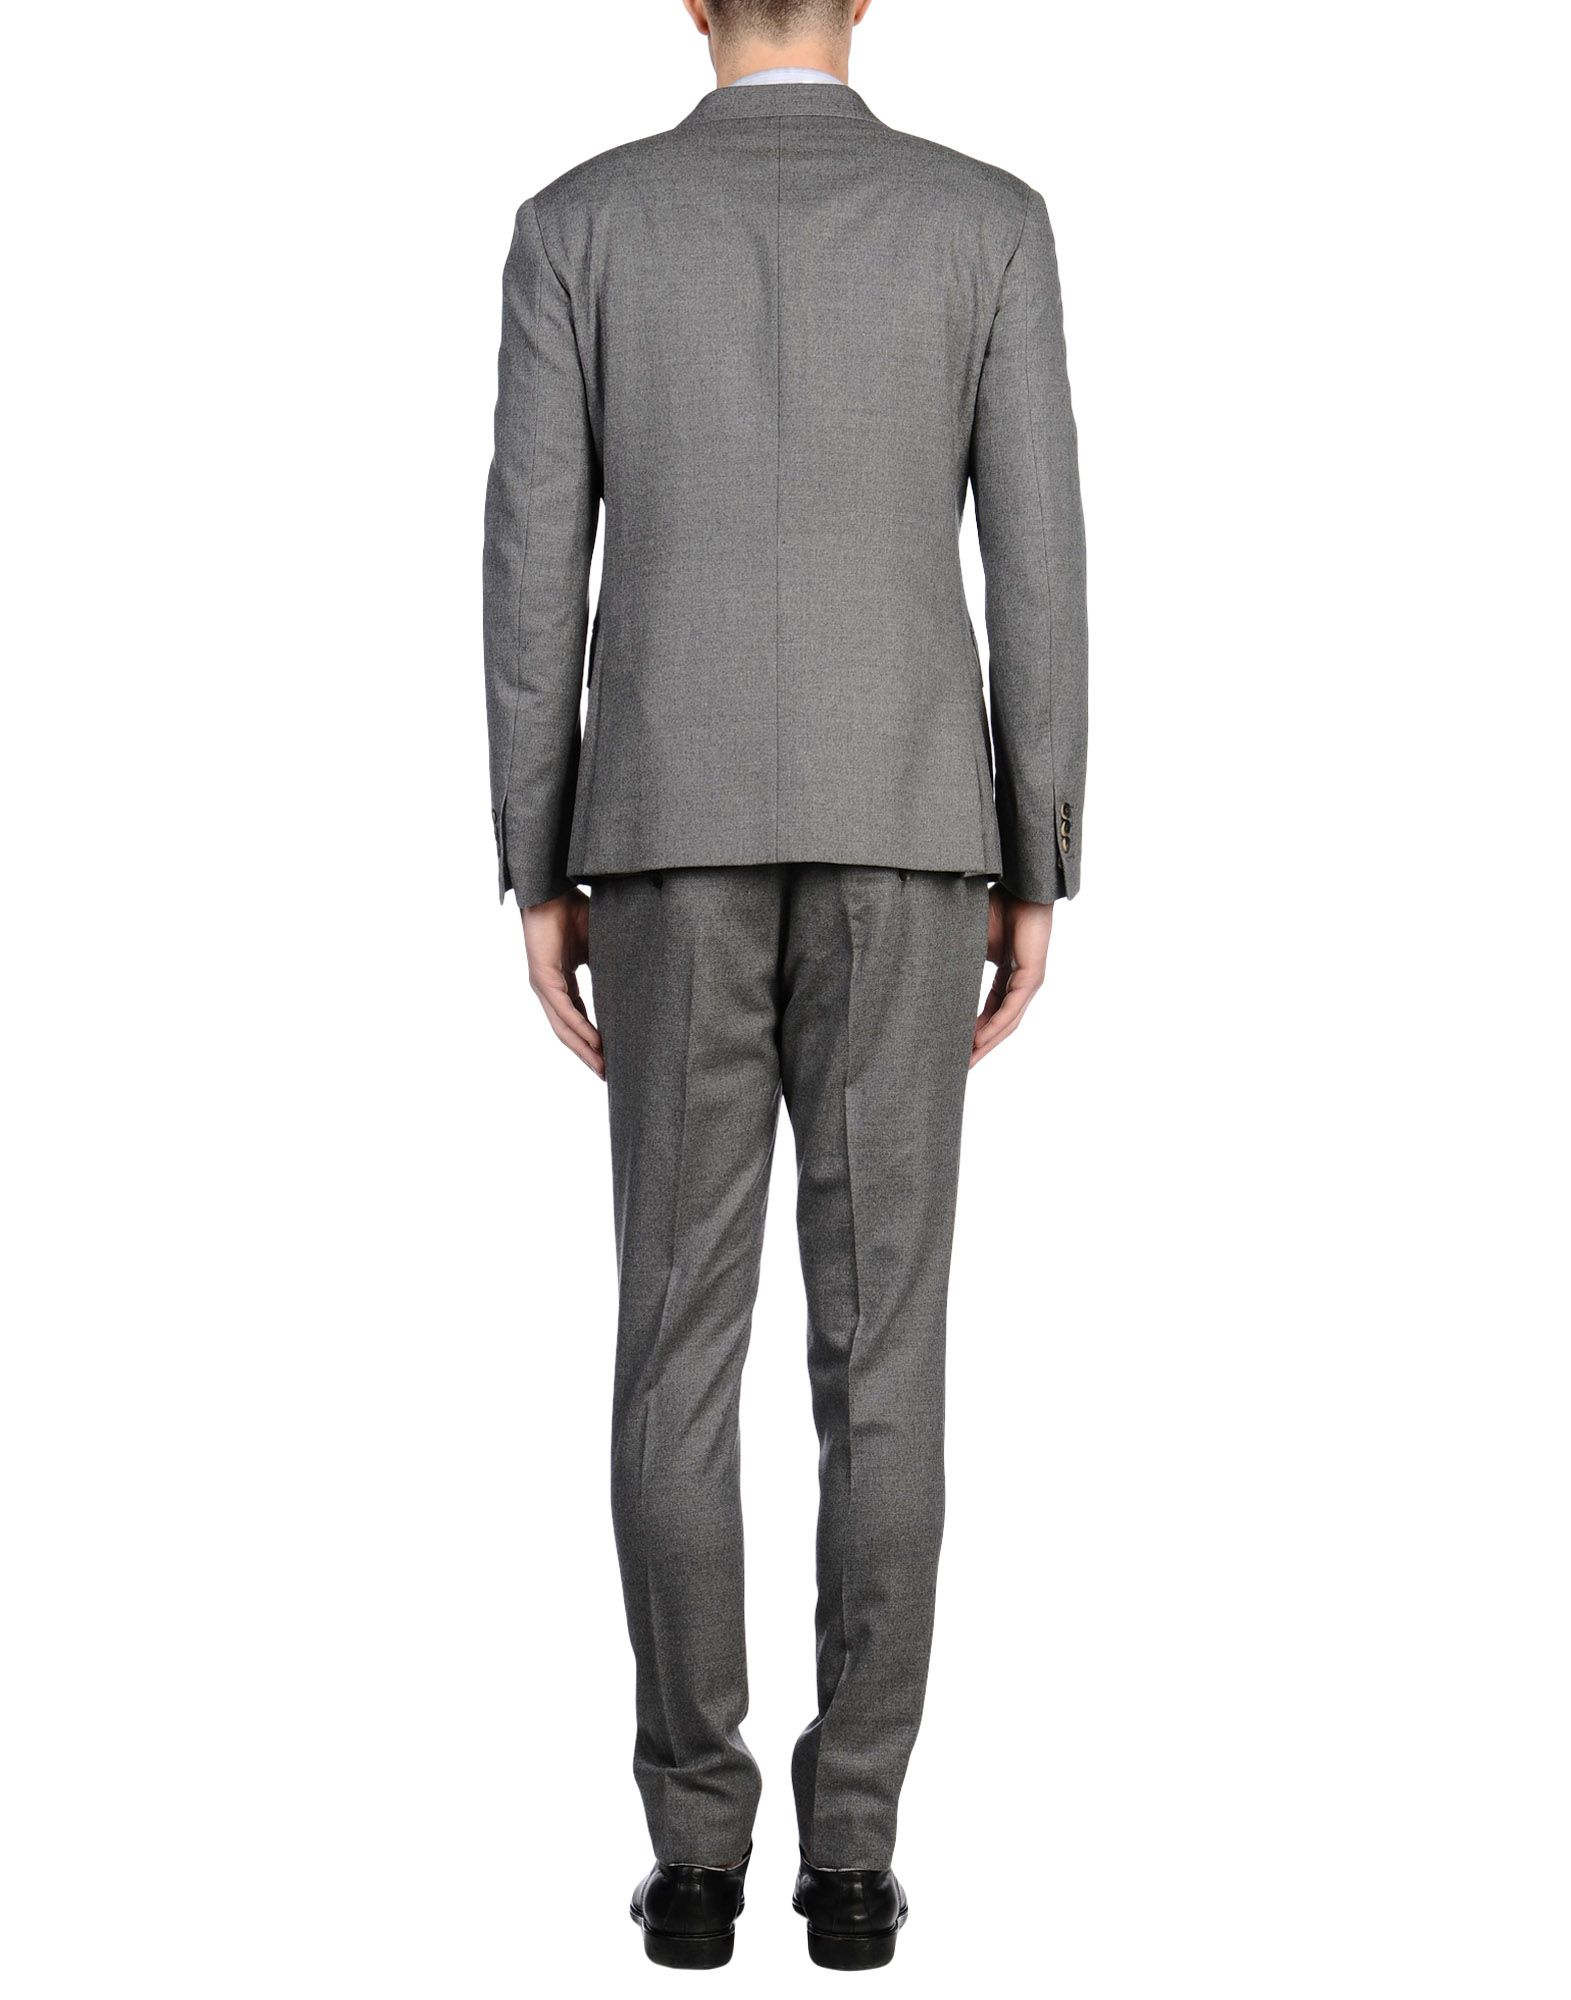 Lyst - Atelier Scotch Suit in Gray for Men